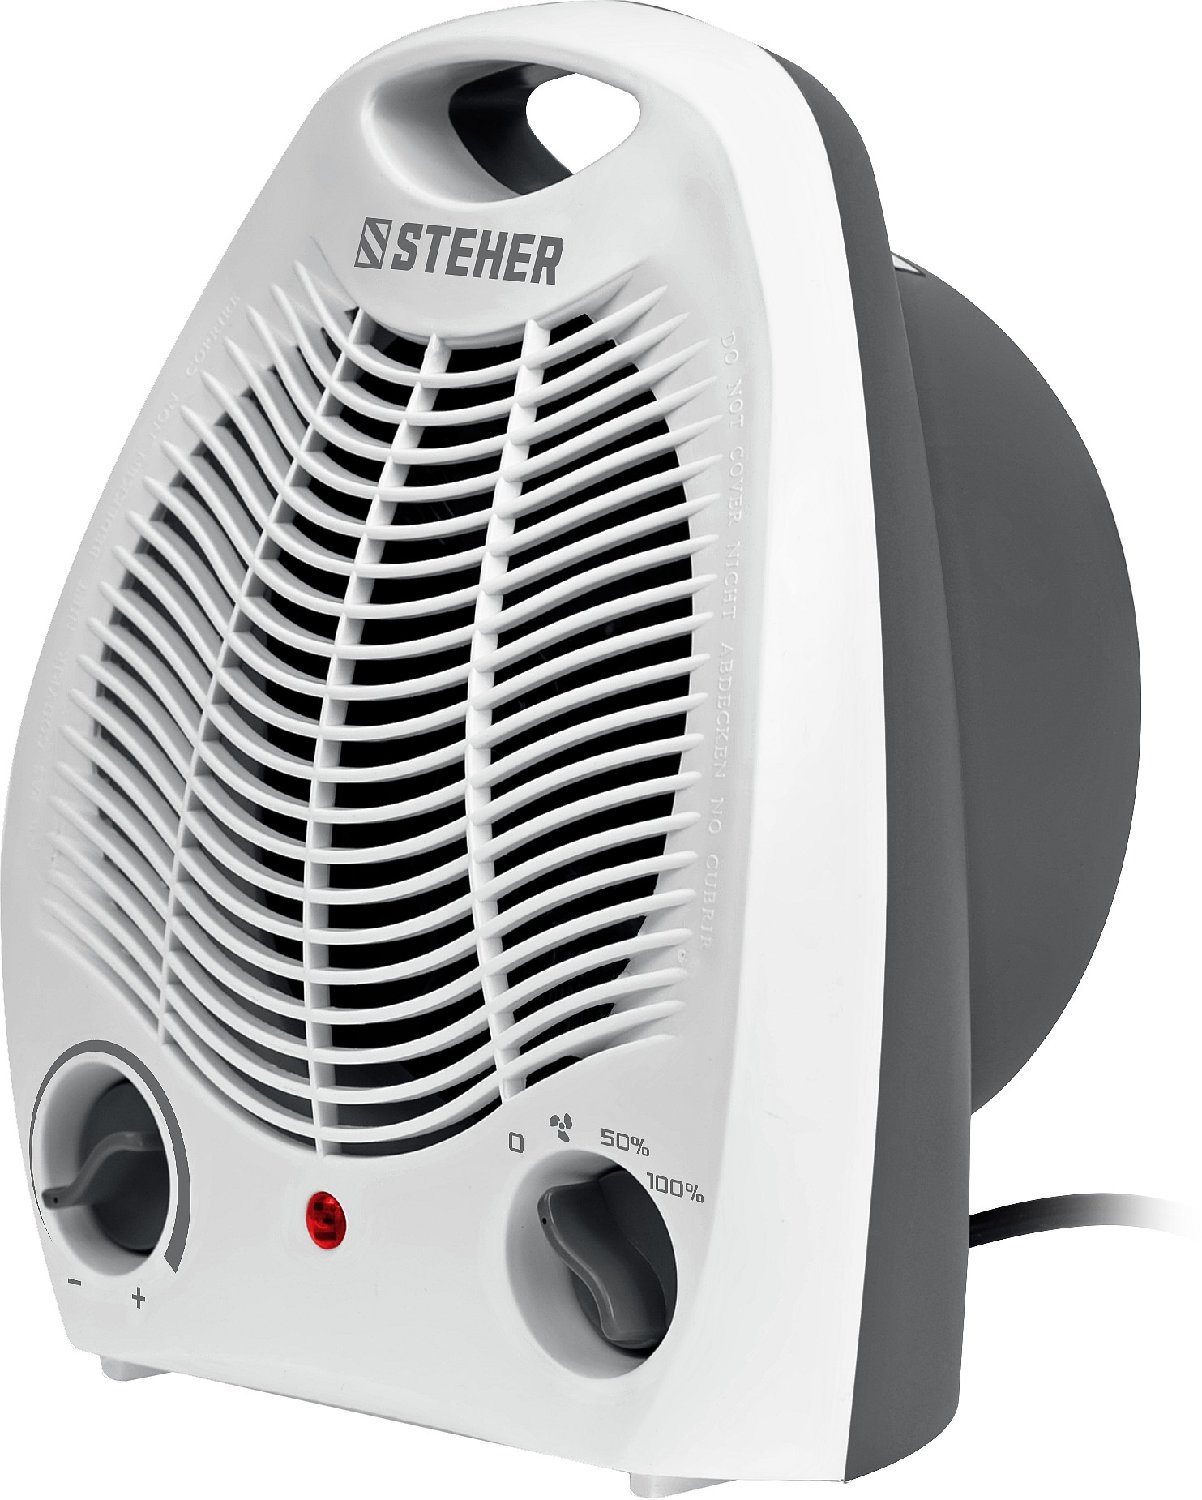 STEHER 2 кВт, тепловентилятор (SVE-2000) (SVE-2000)Купить